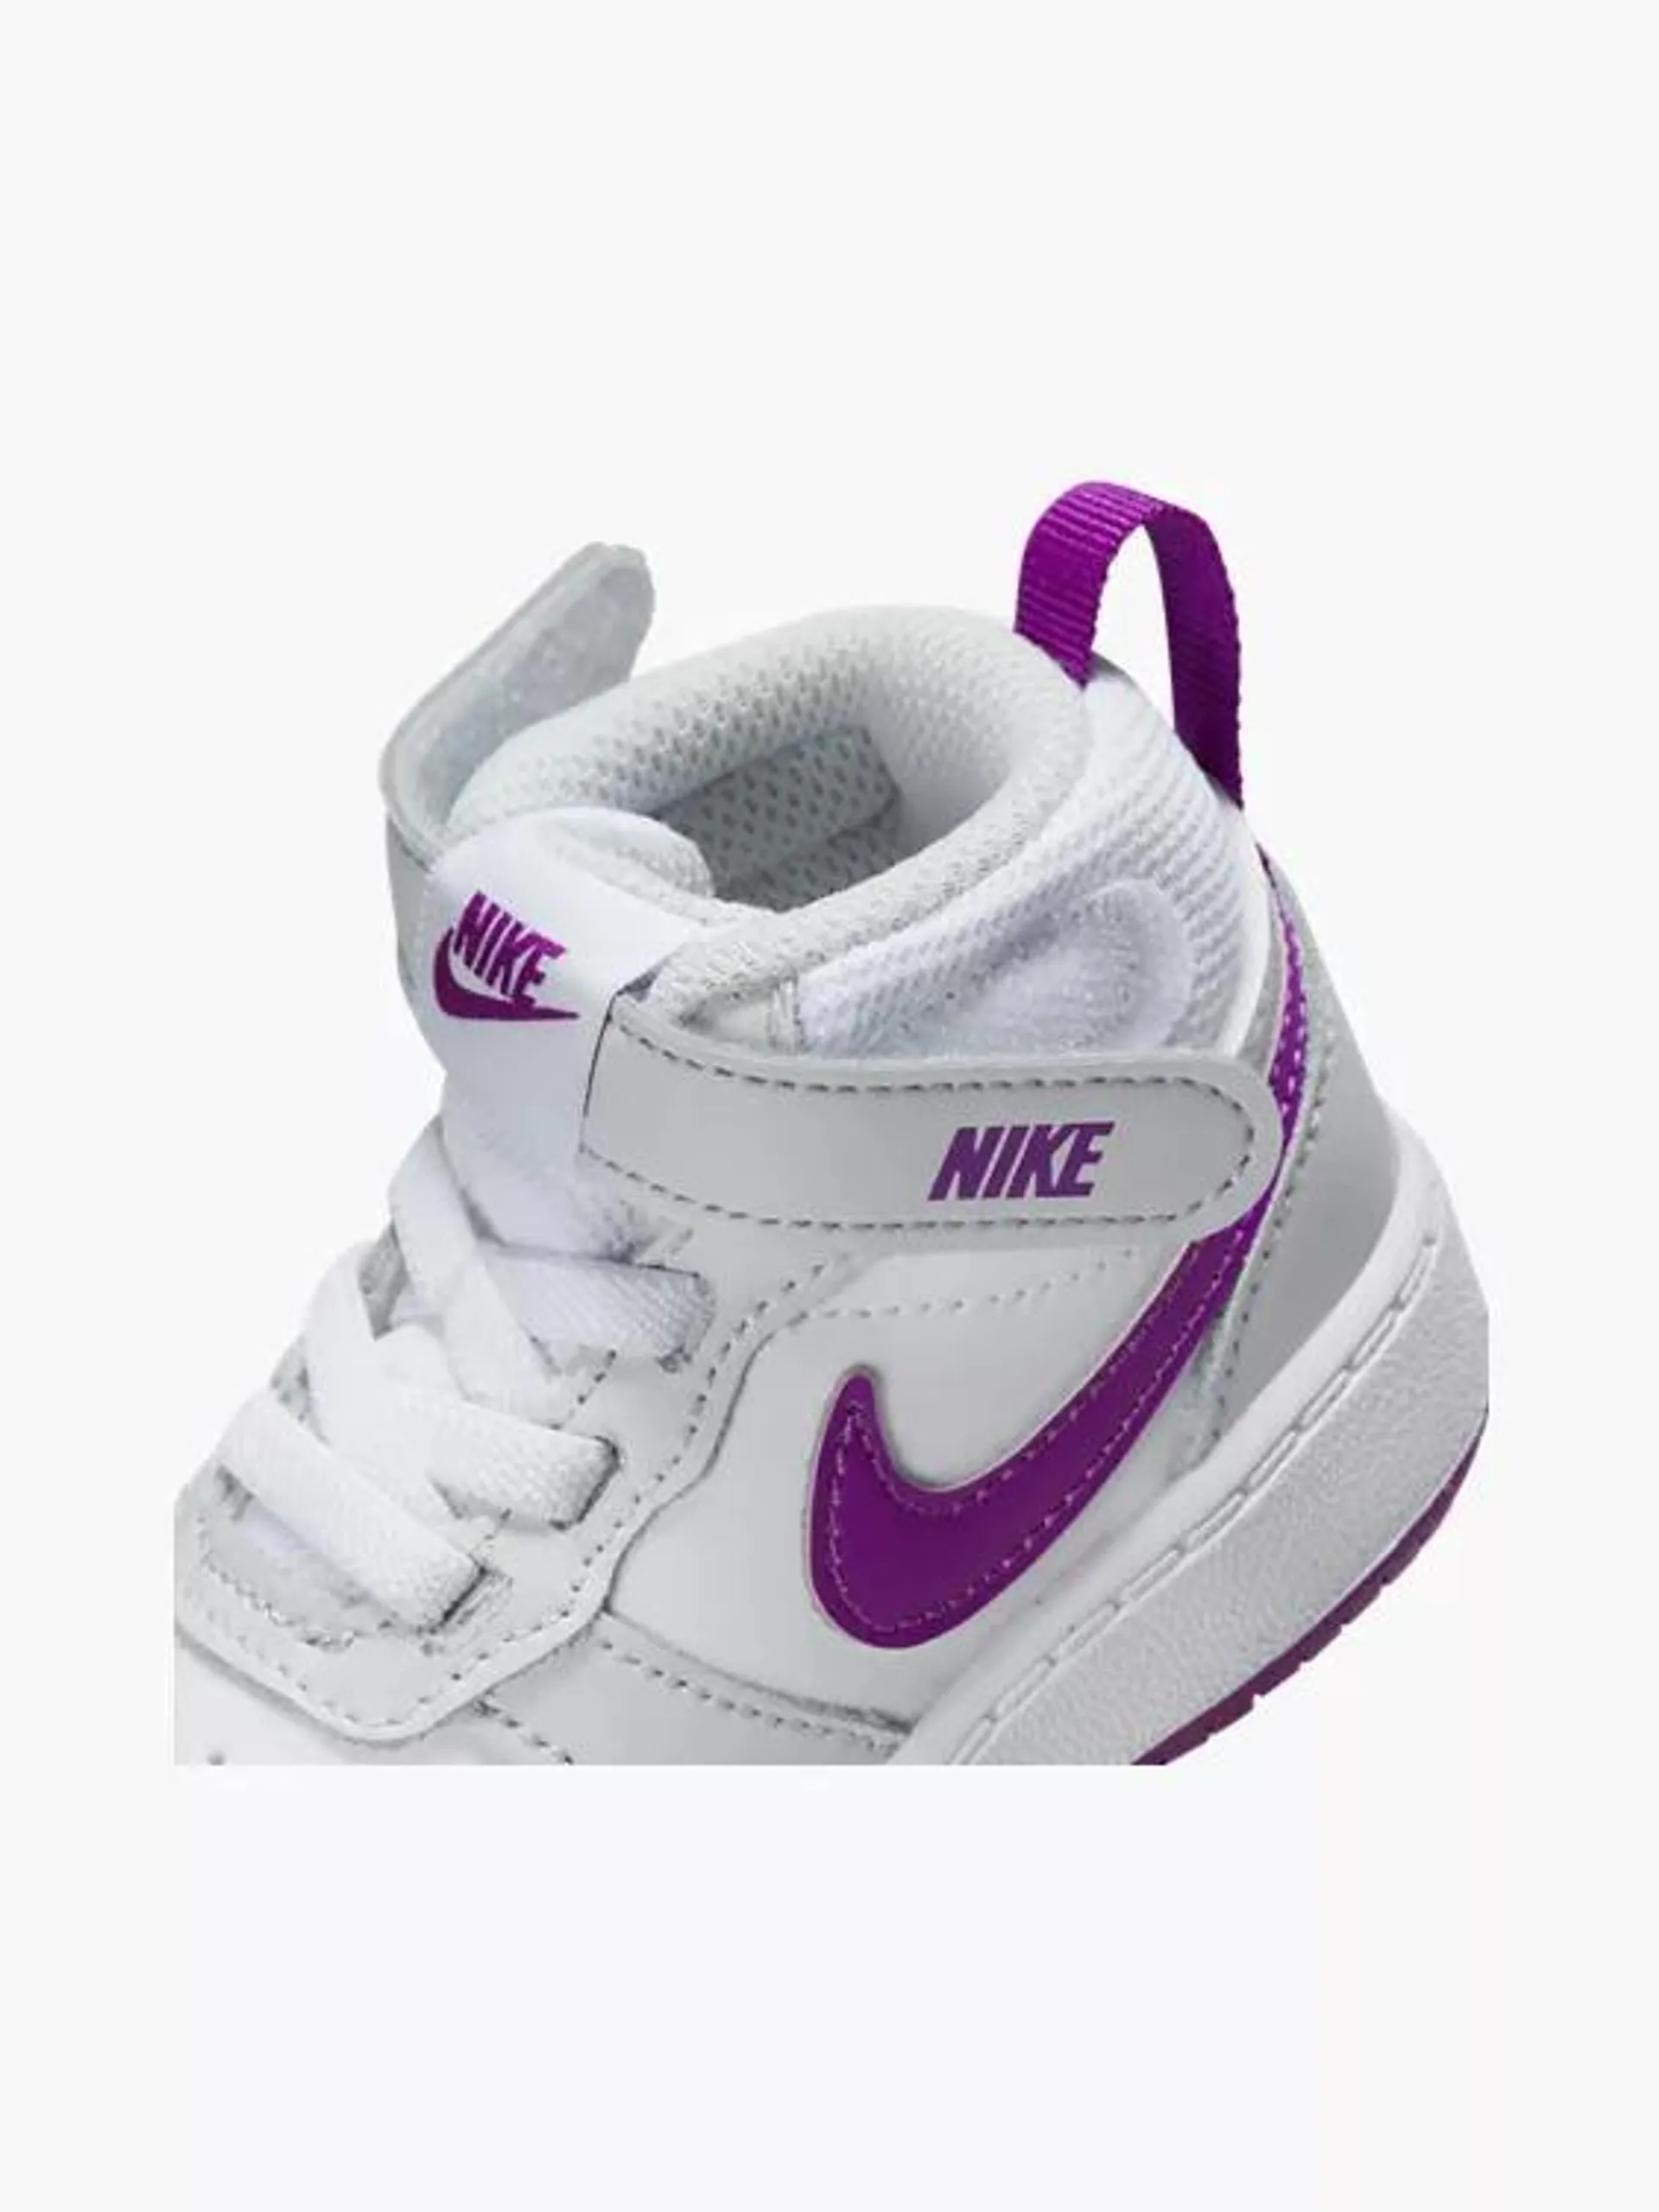 White/Purple Nike Borough Mid 2 Toddler Trainer